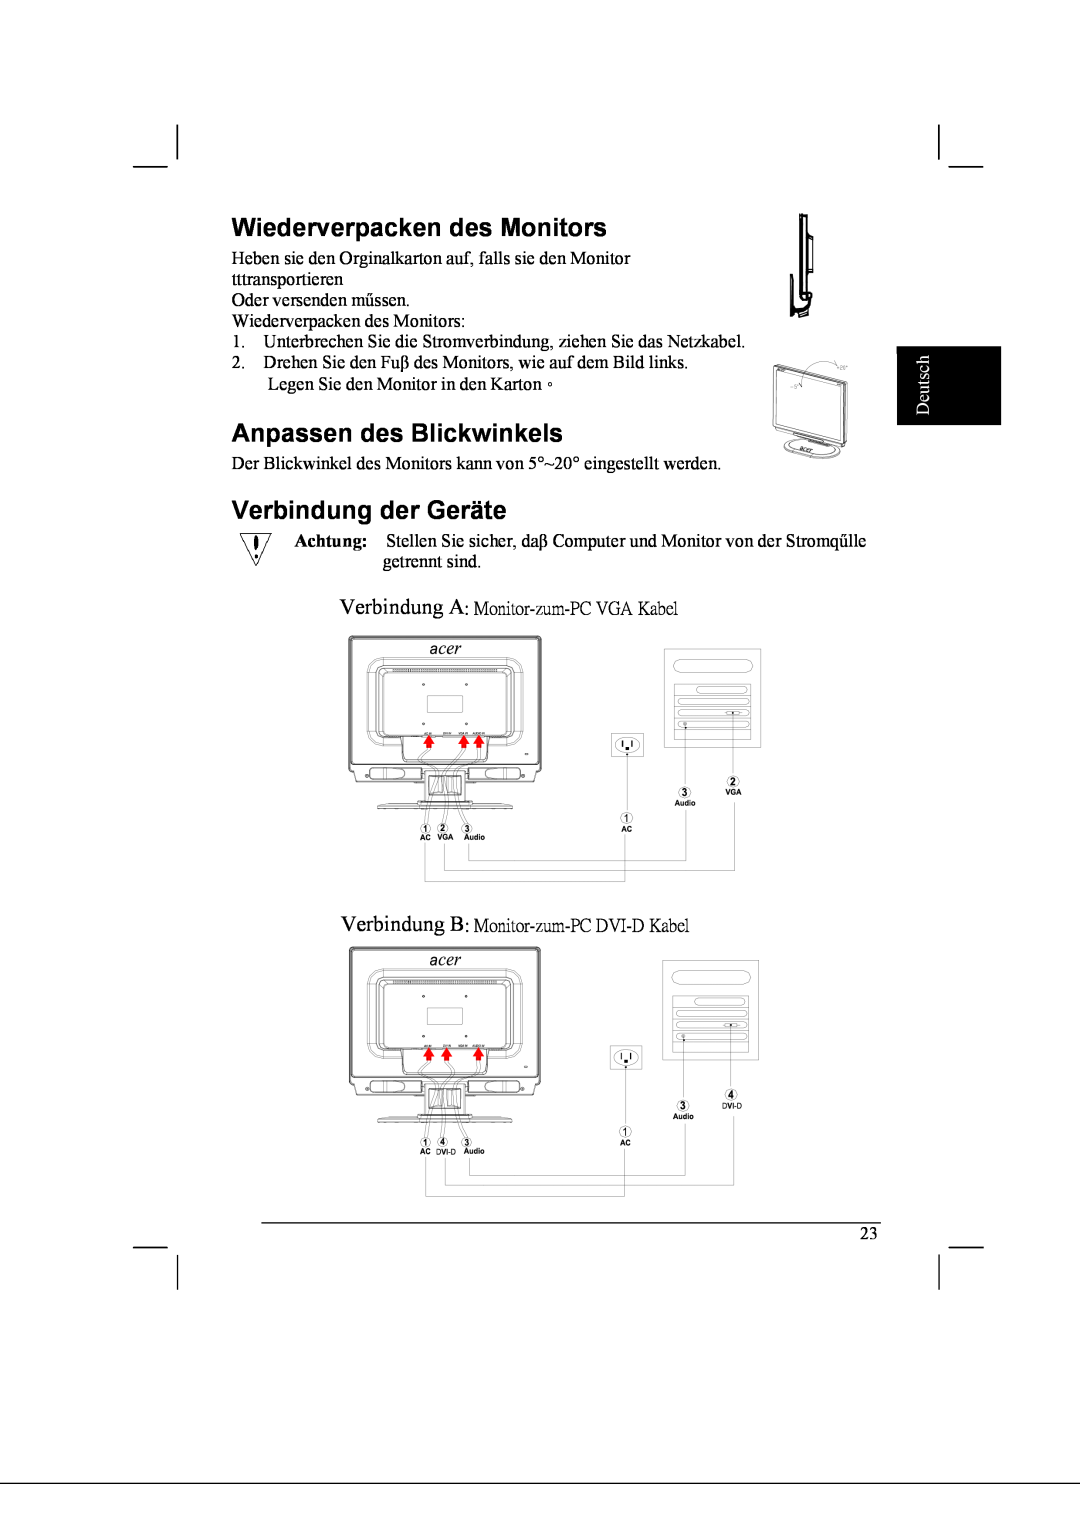 Acer AL2021 manual Wiederverpacken des Monitors, Anpassen des Blickwinkels, Verbindung der Geräte, Deutsch 